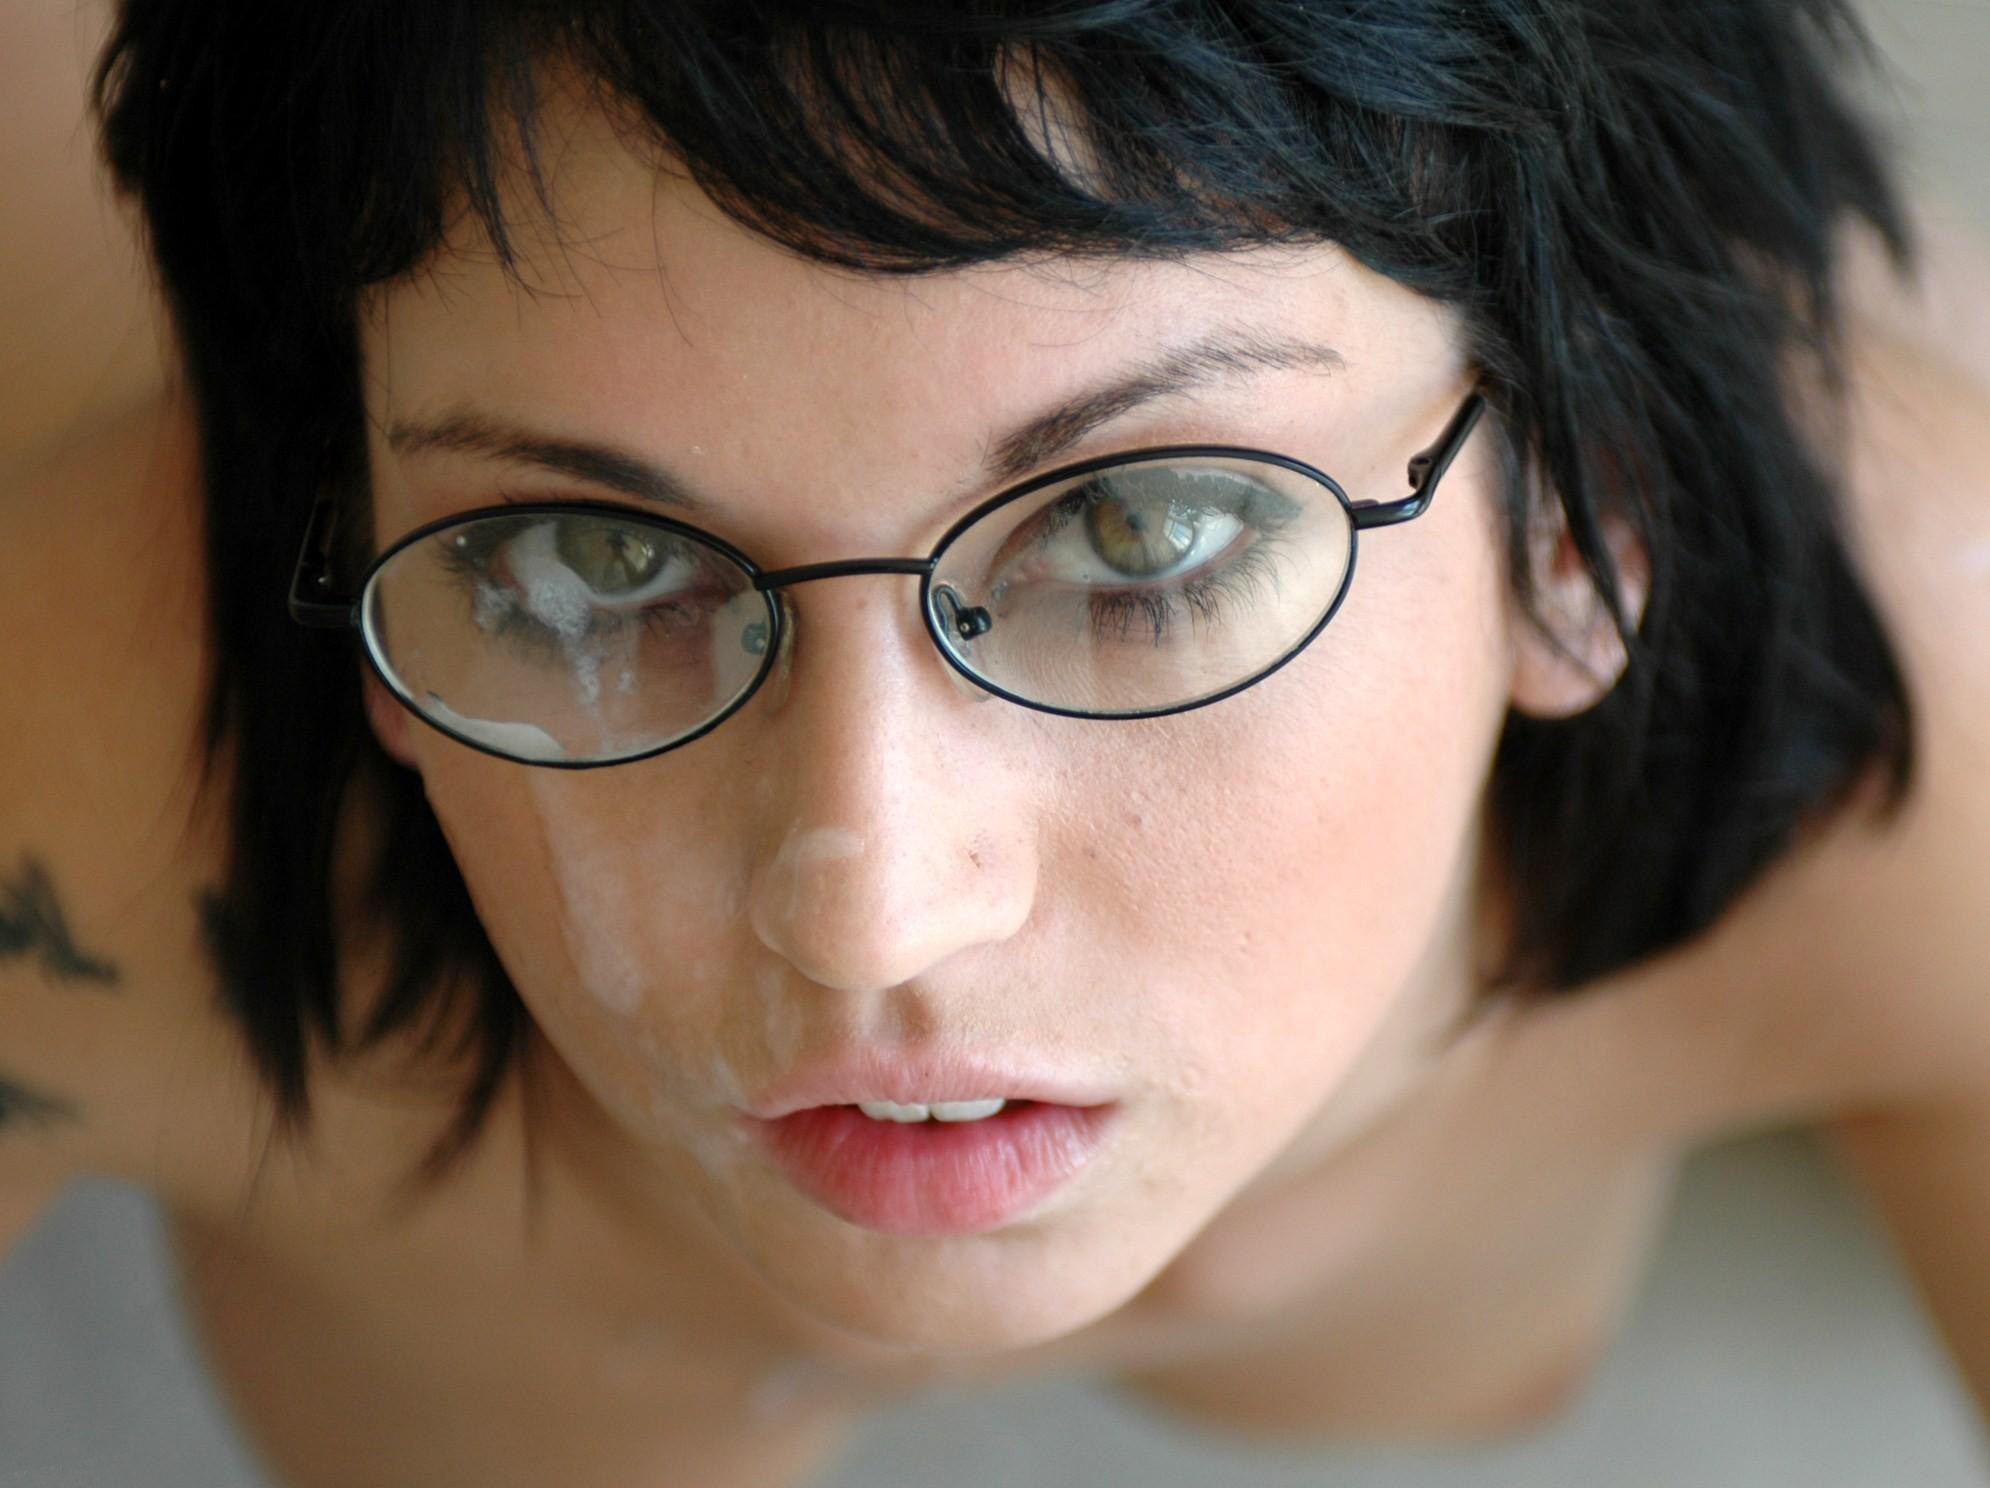 Short Haircut in Glasses Girl Porn (76 photos) - porn ddeva